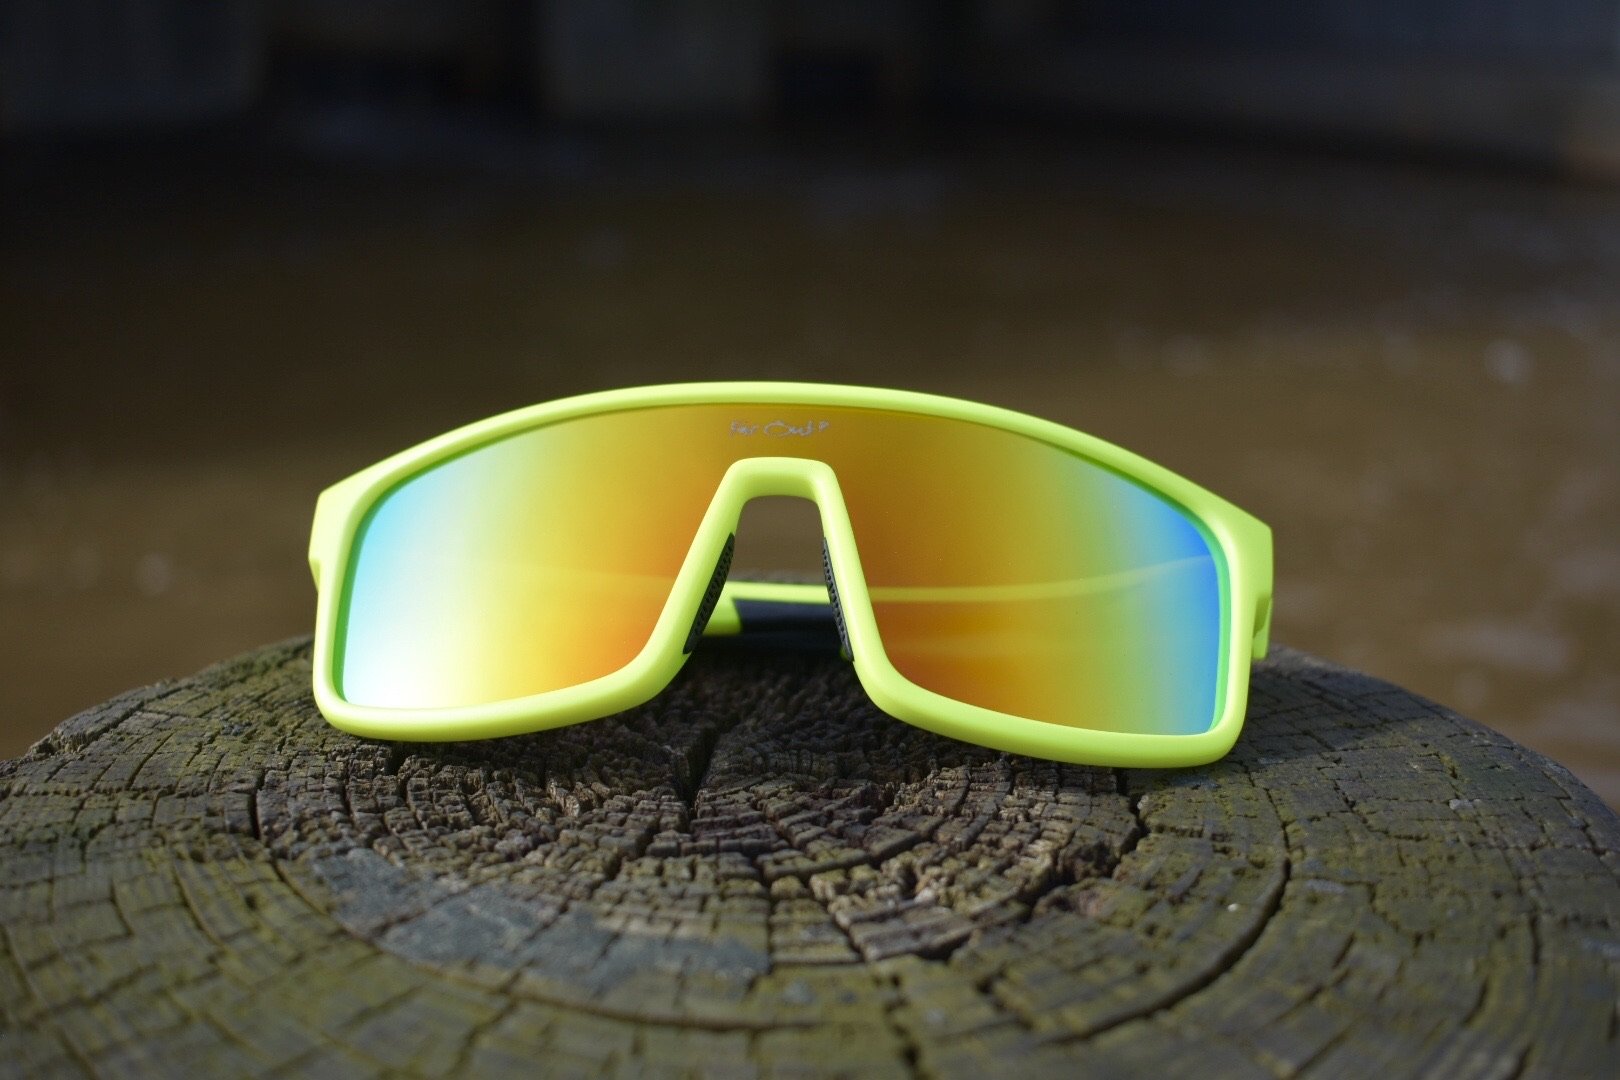 FarOut Sunglasses - Neon Yellow Polarized Retros Orange Lens